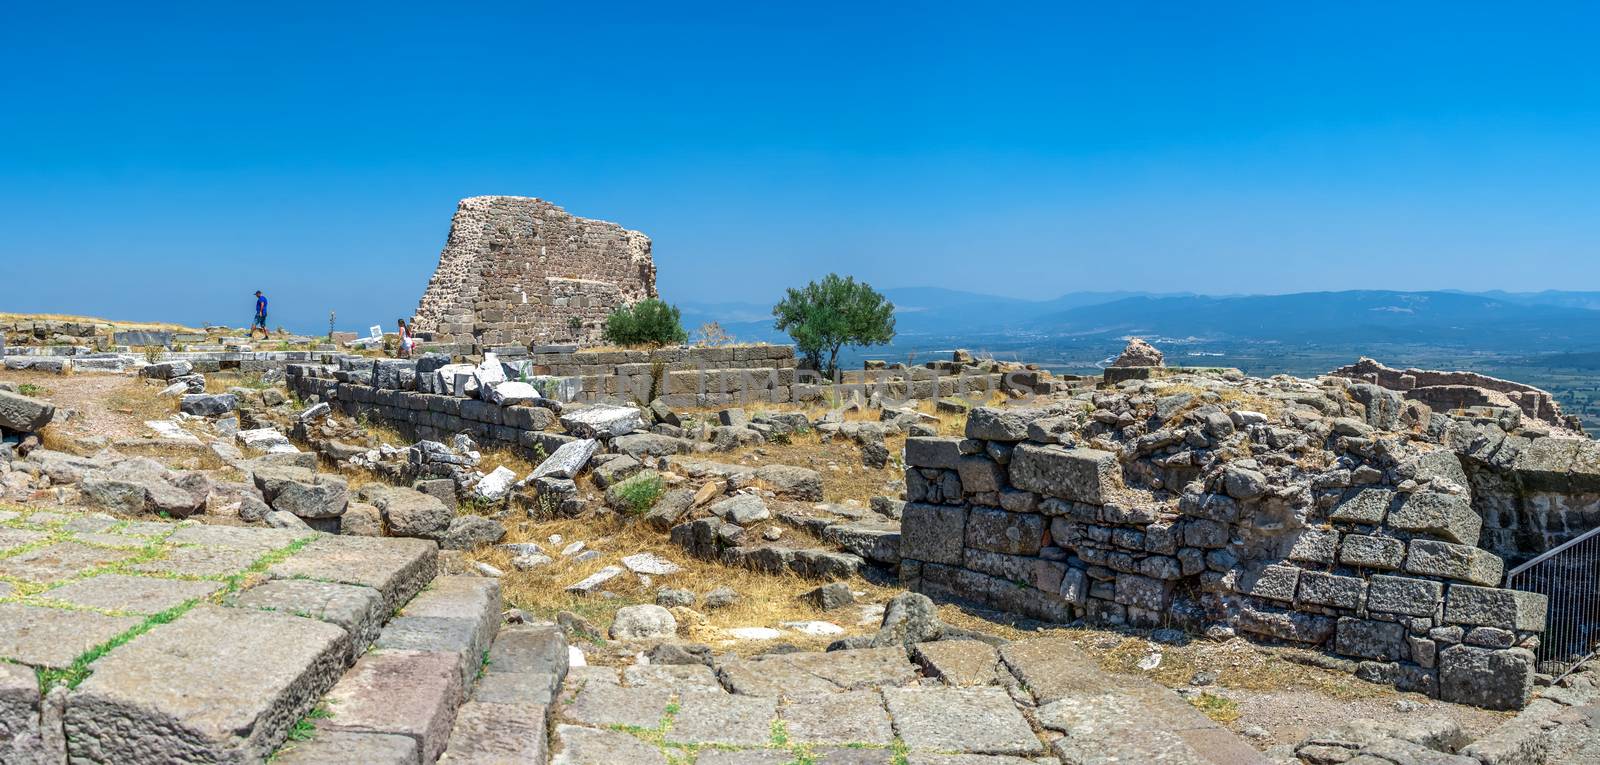 Pergamon Ancient City in Turkey by Multipedia